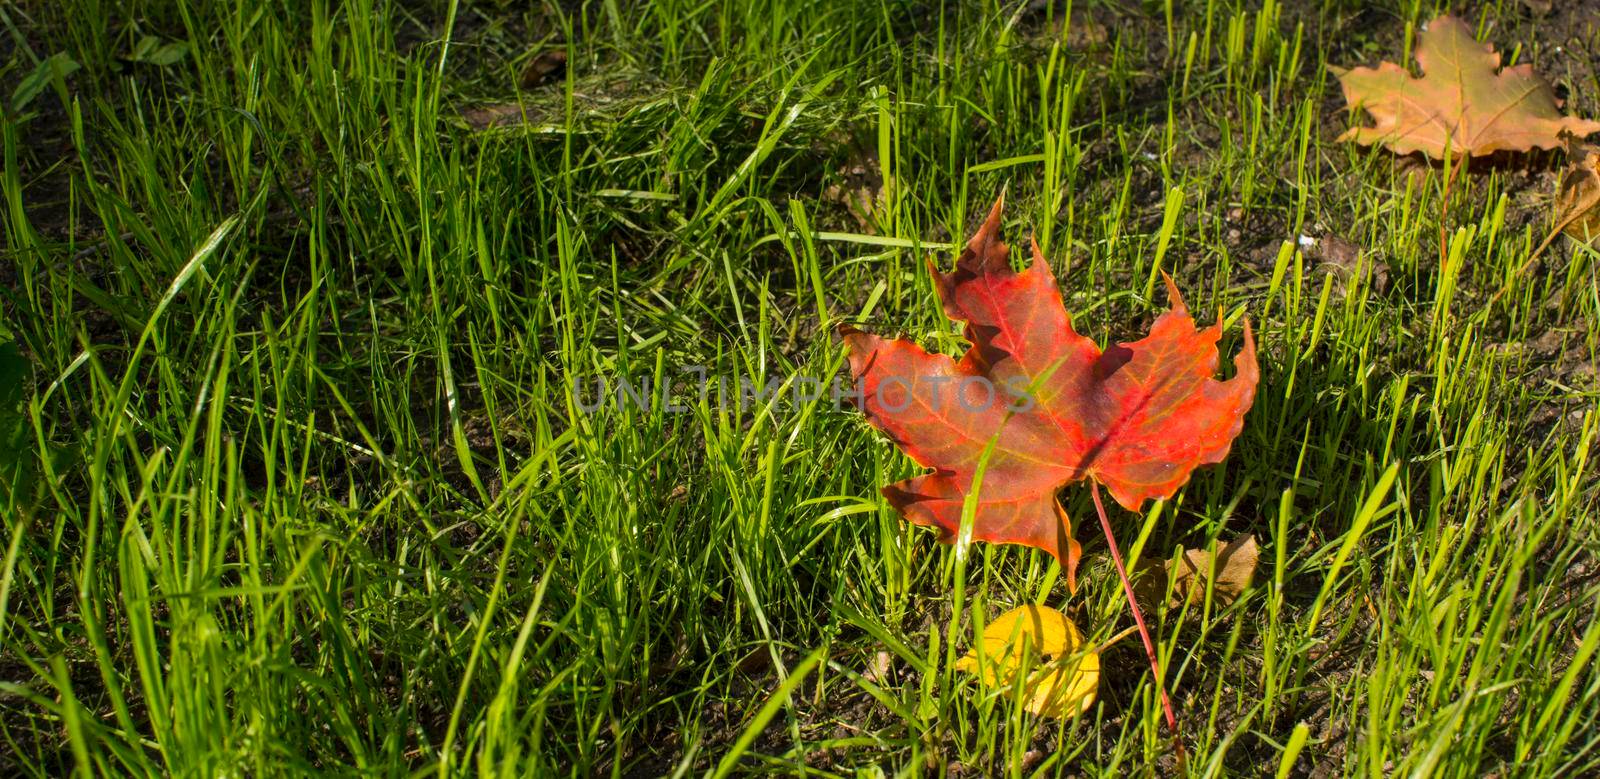 Autumn foliage. Autumn leaves fallen on the ground. Fall leaf. by kajasja